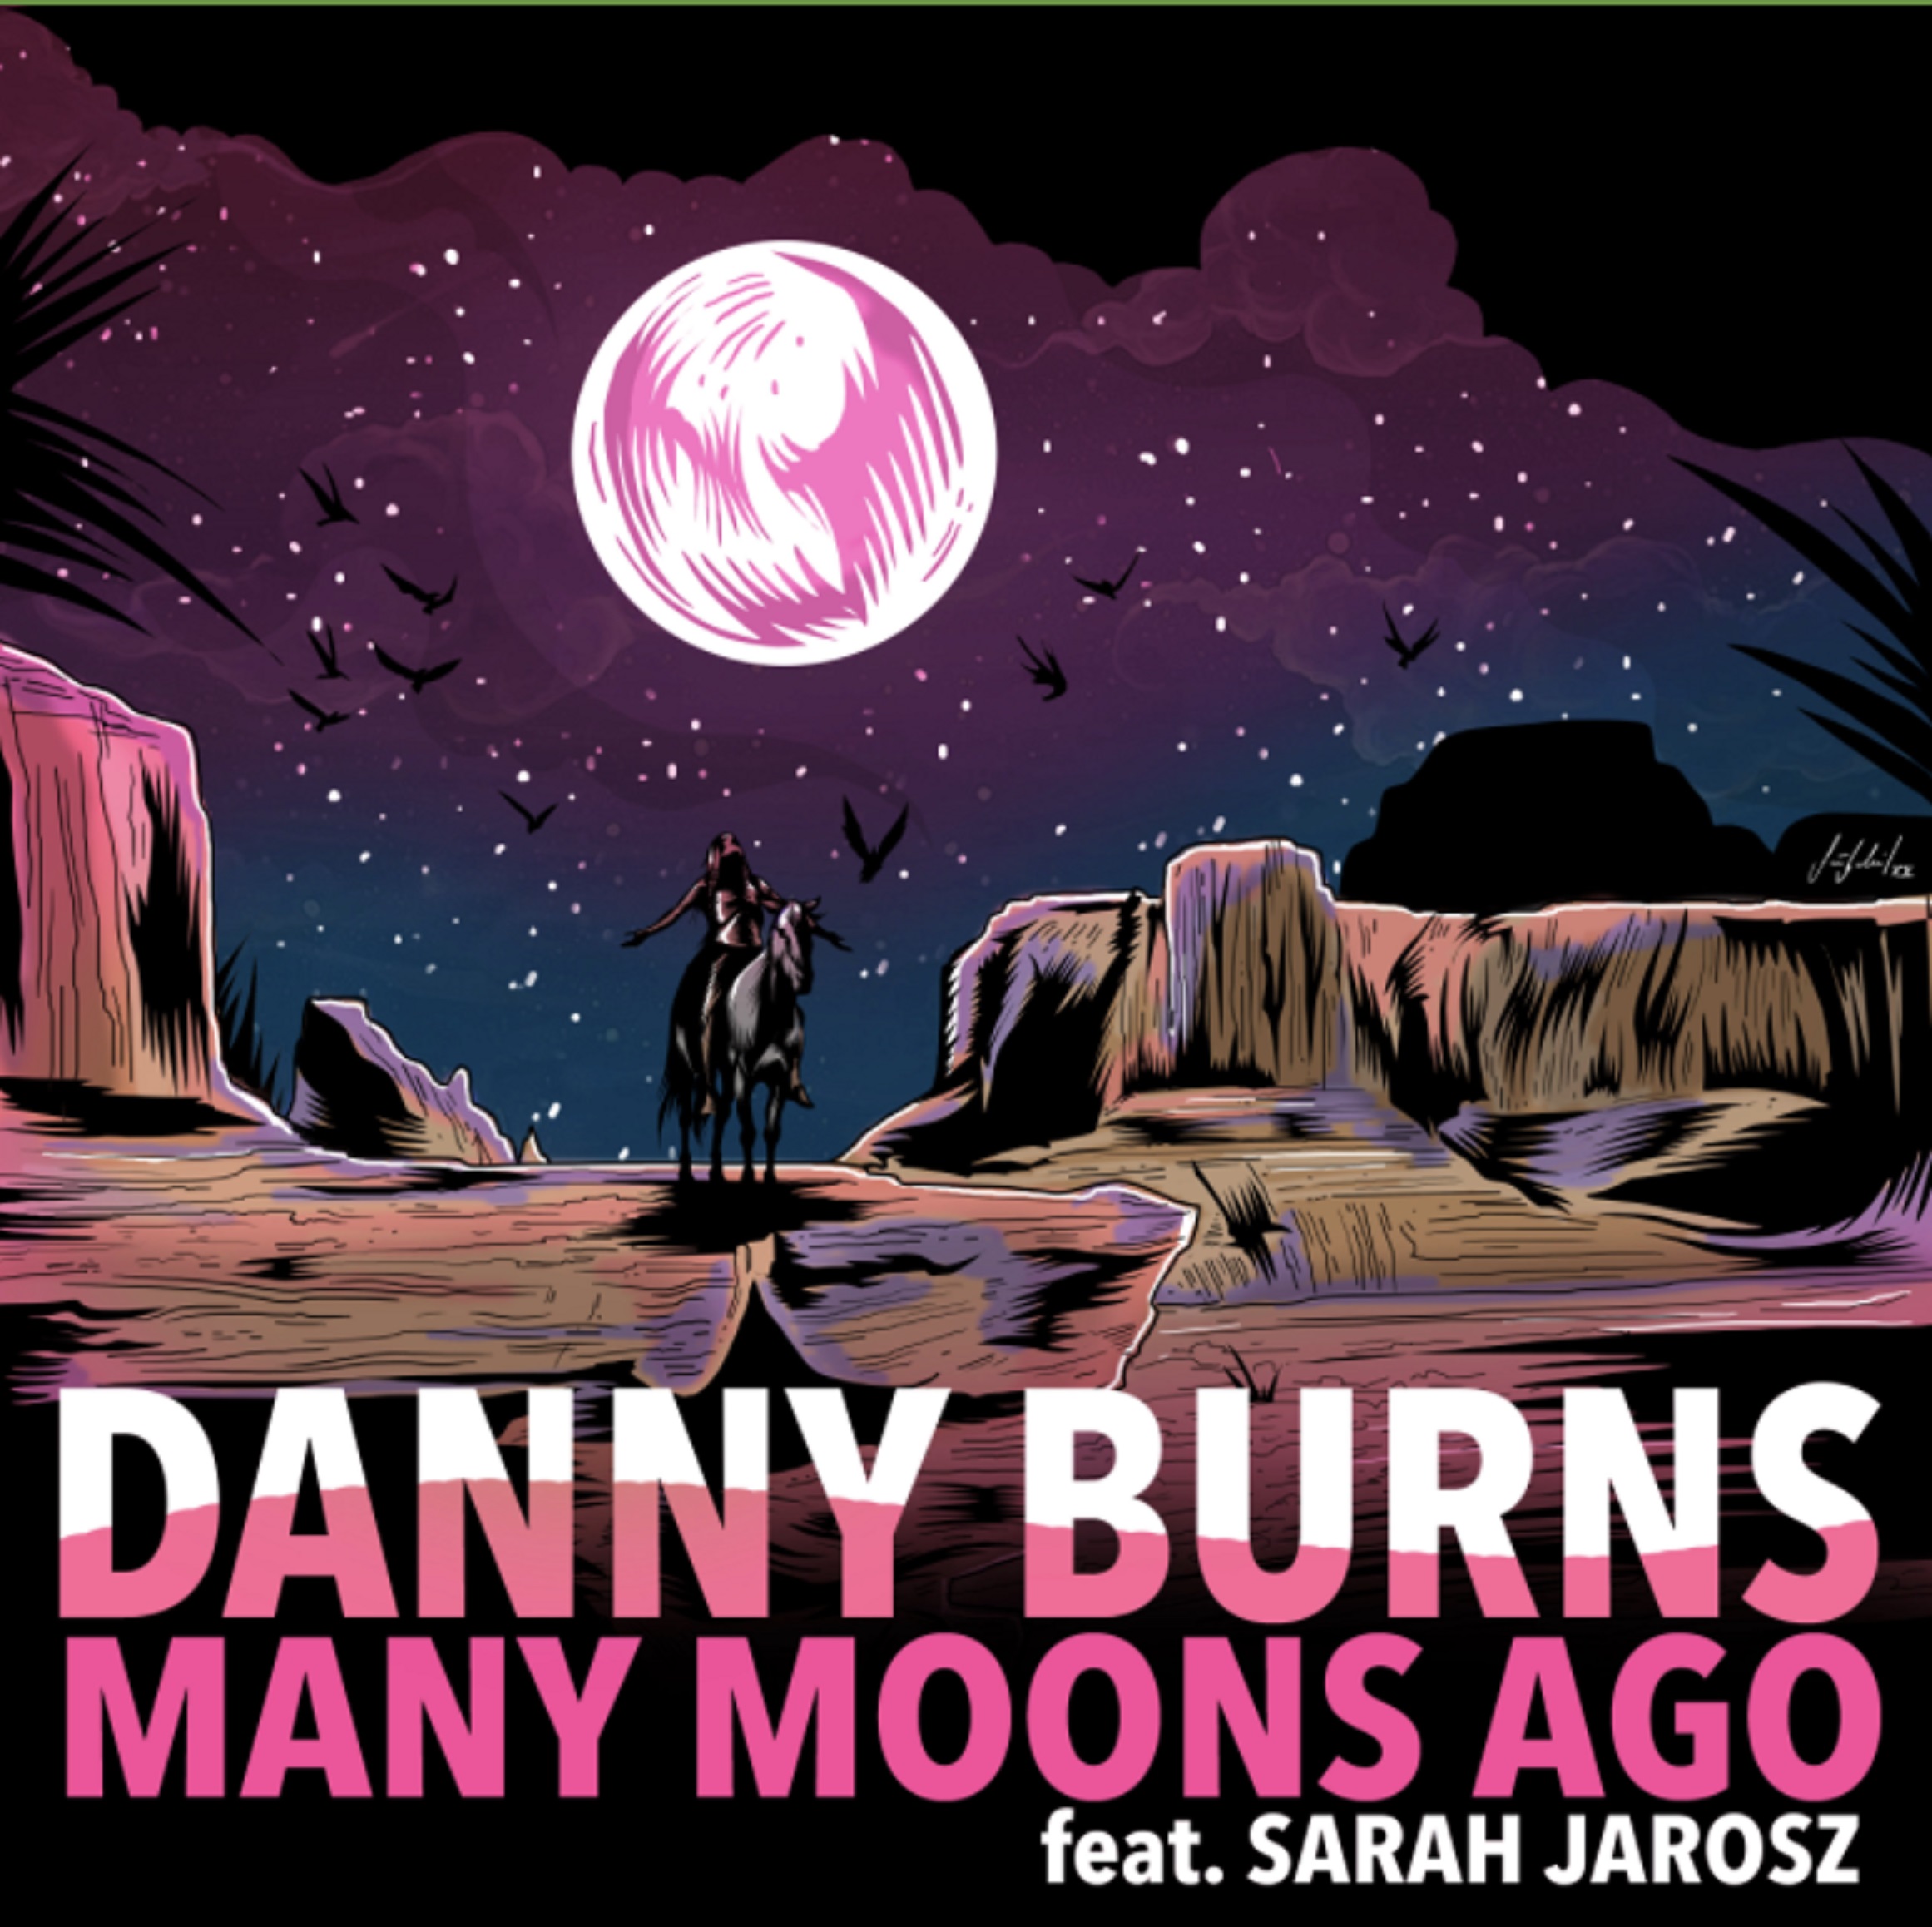 Danny Burns Teams Up With Sarah Jarosz For New Single “Many Moons Ago”